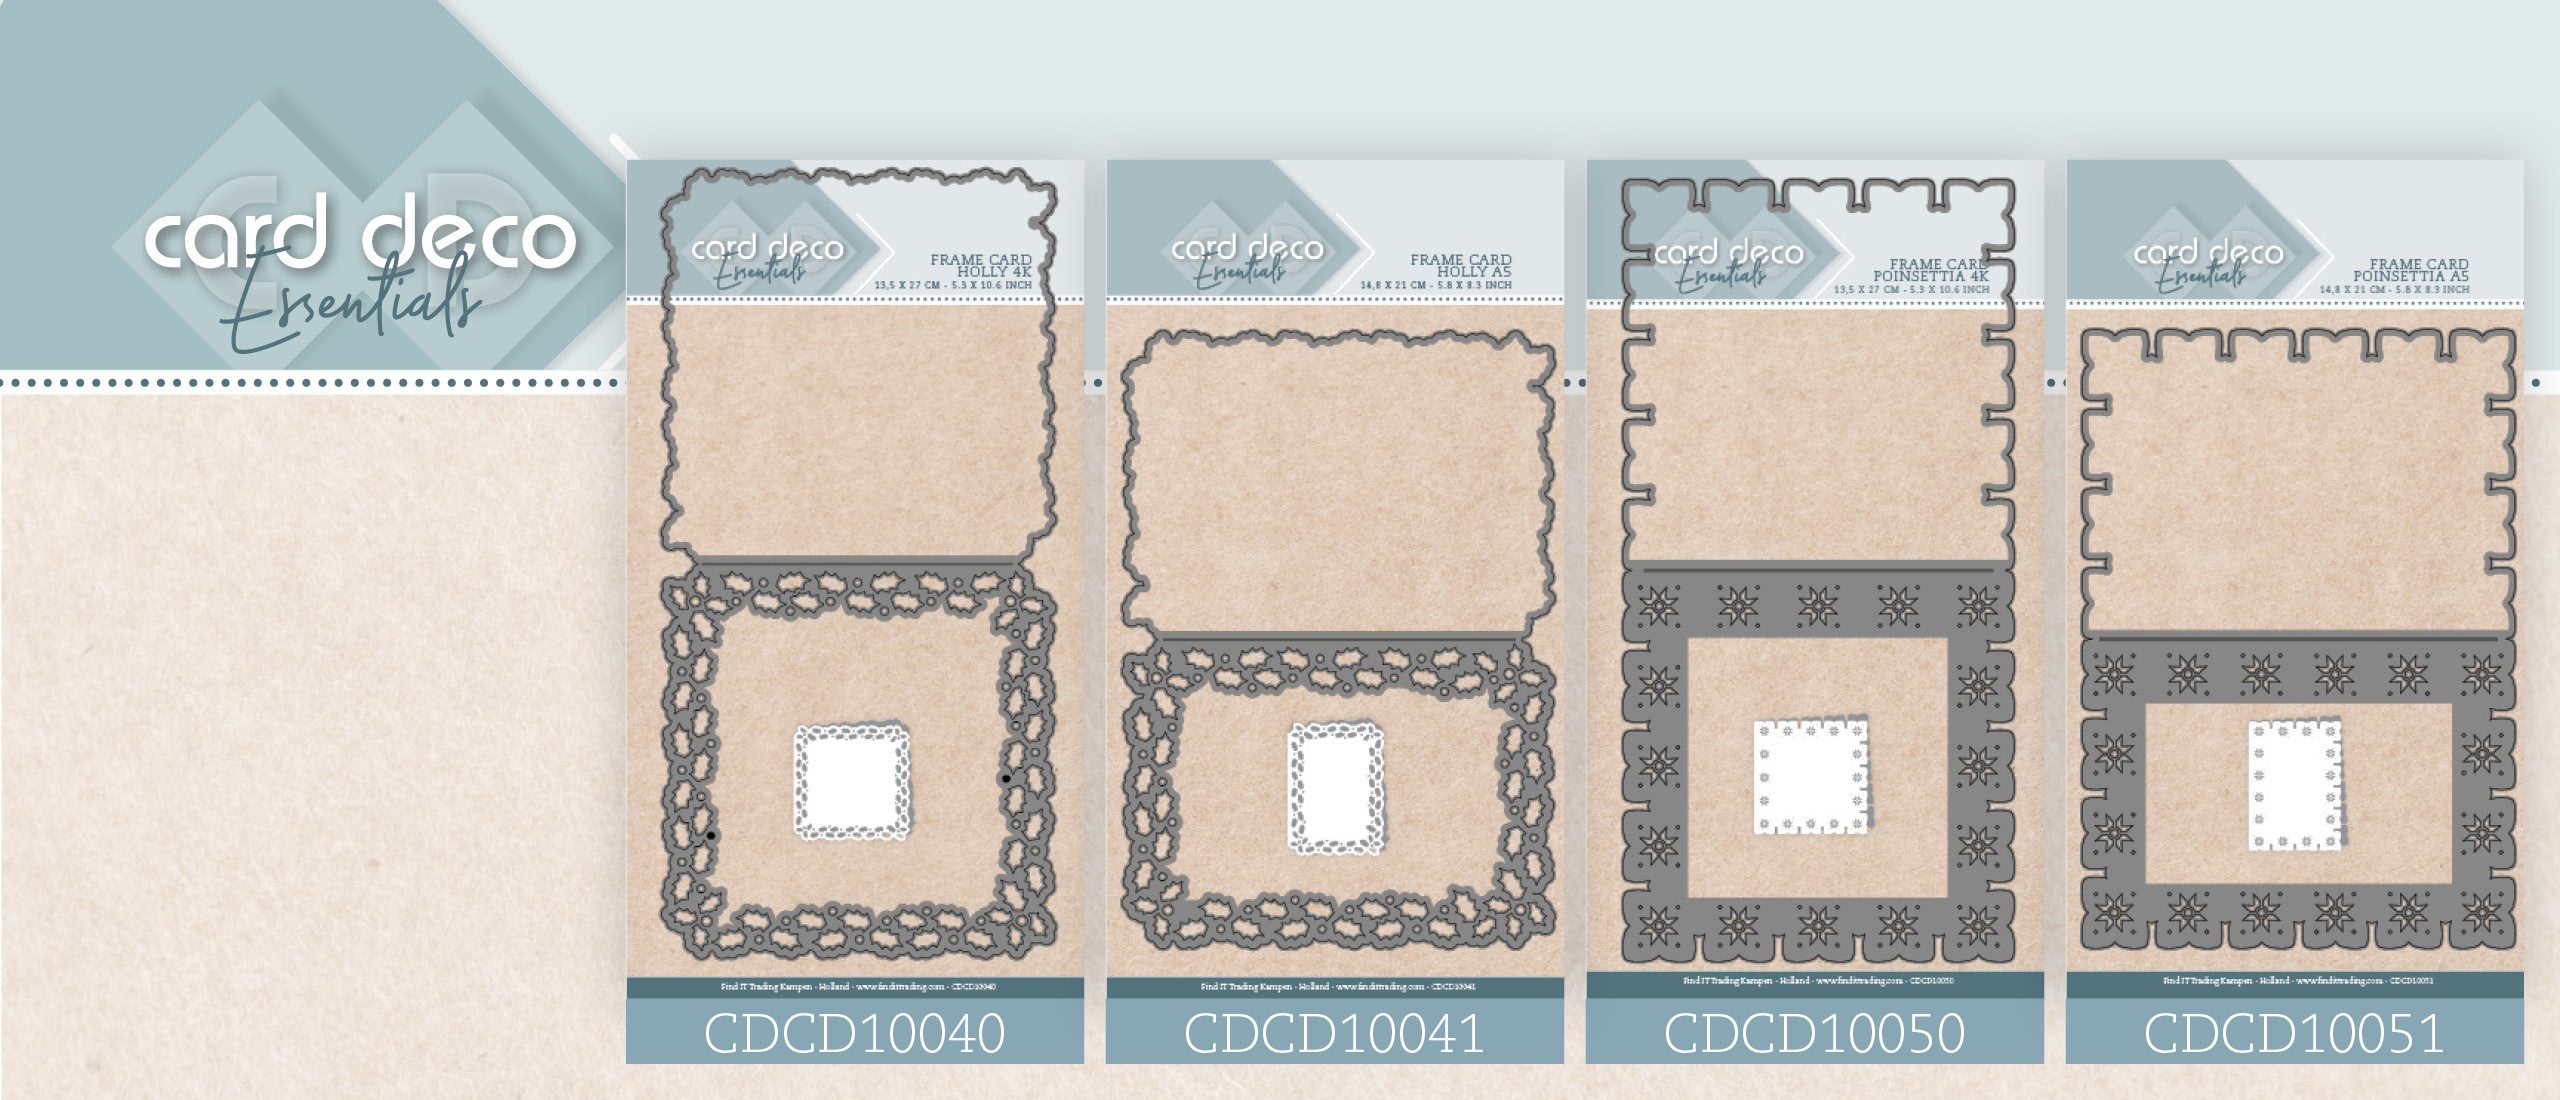 Nieuwe Frame Card Dies van Card Deco Essentials! Hulst en Poinsettia (CDCD10040,CDCD10041, CDCD50, CDCD10051)